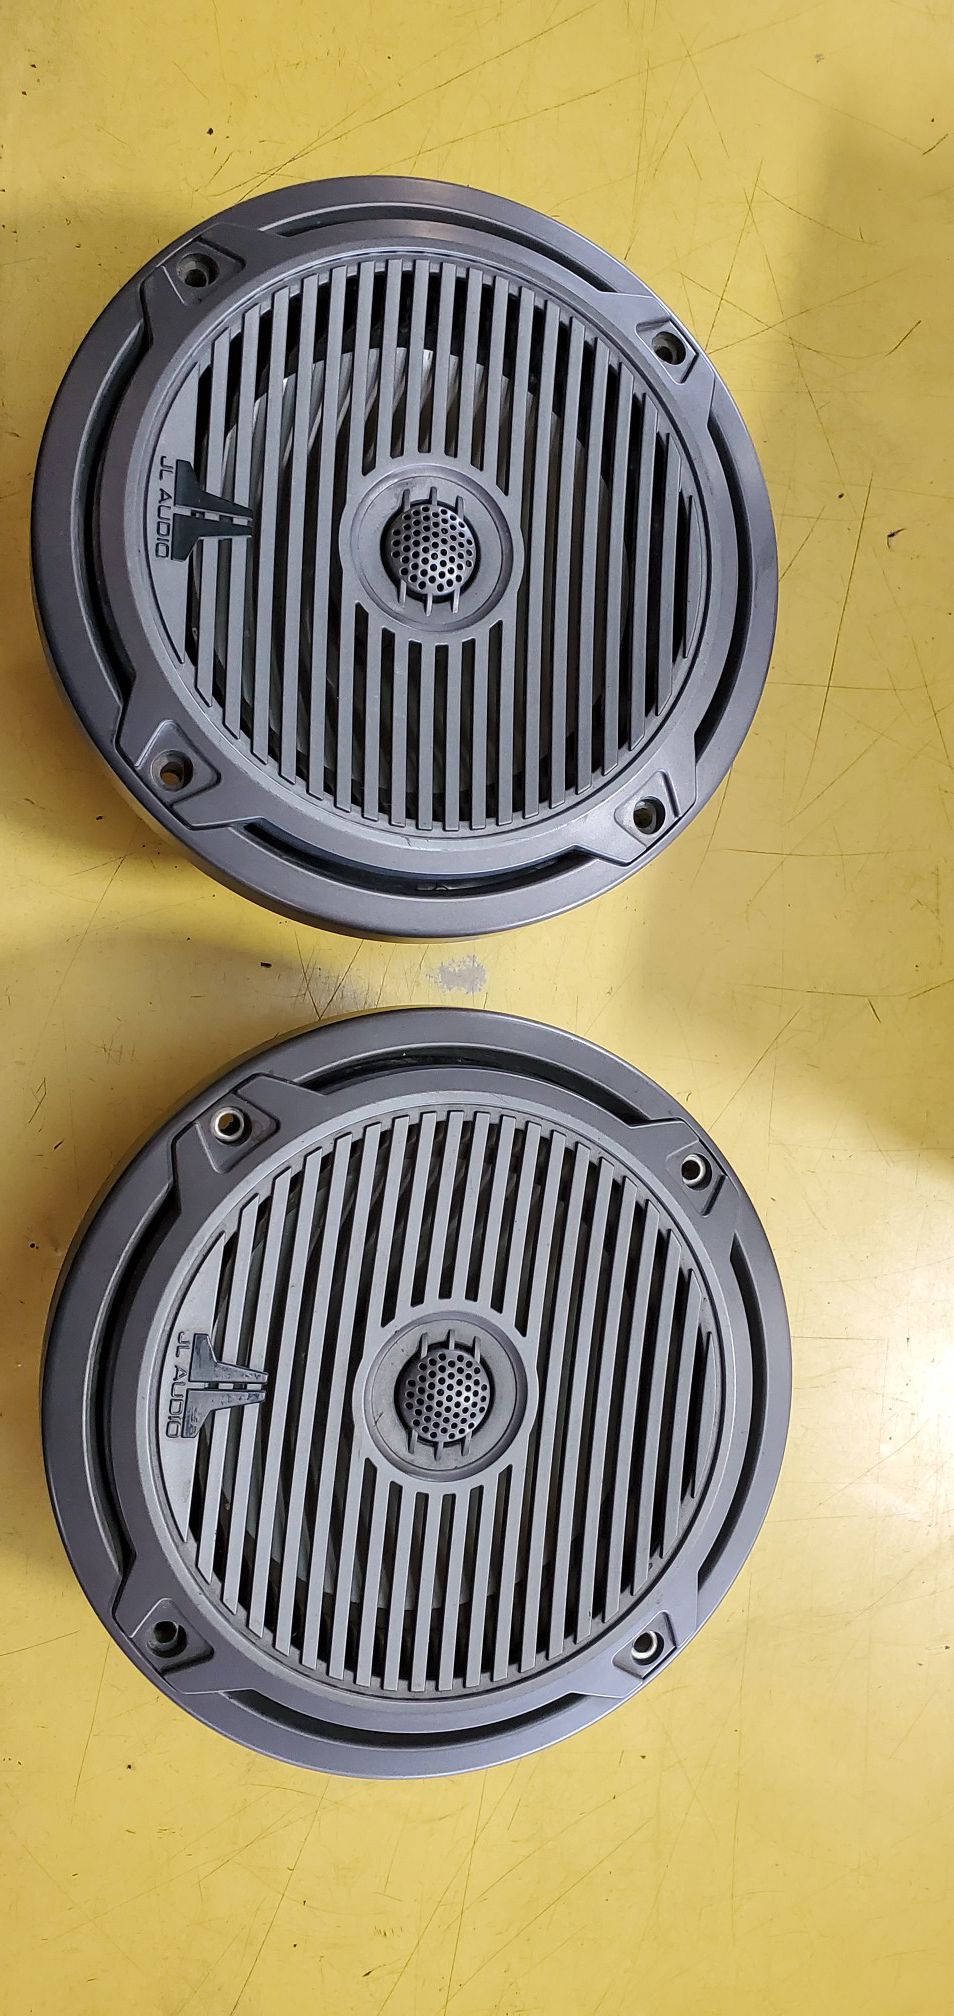 2 jl mx650 6.5 inch marine speakers